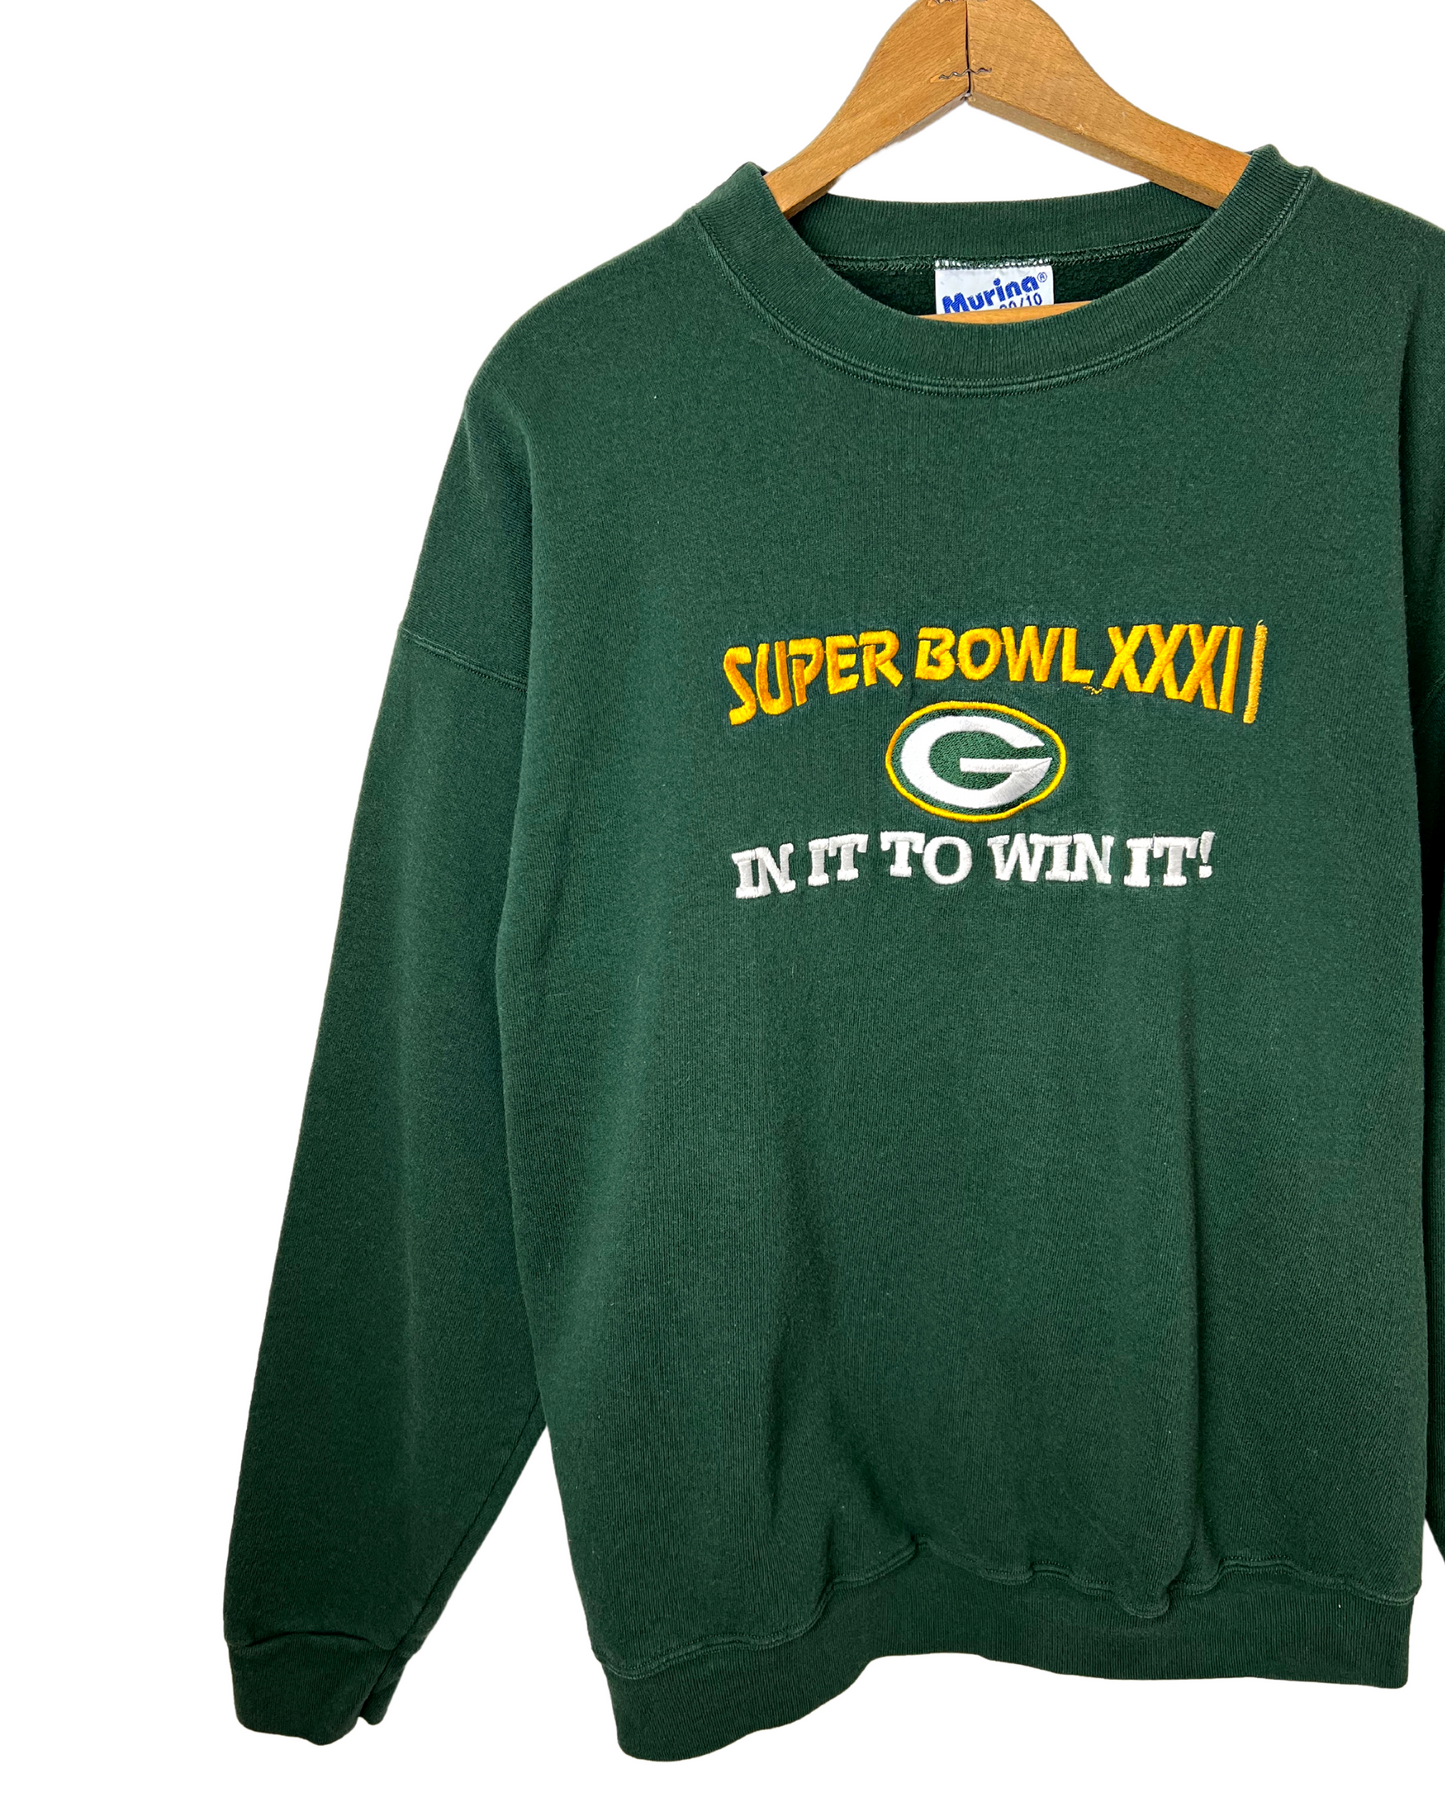 Vintage 90’s Green Bay Packers Super Bowl XXXII In It To Win It Football Sweatshirt